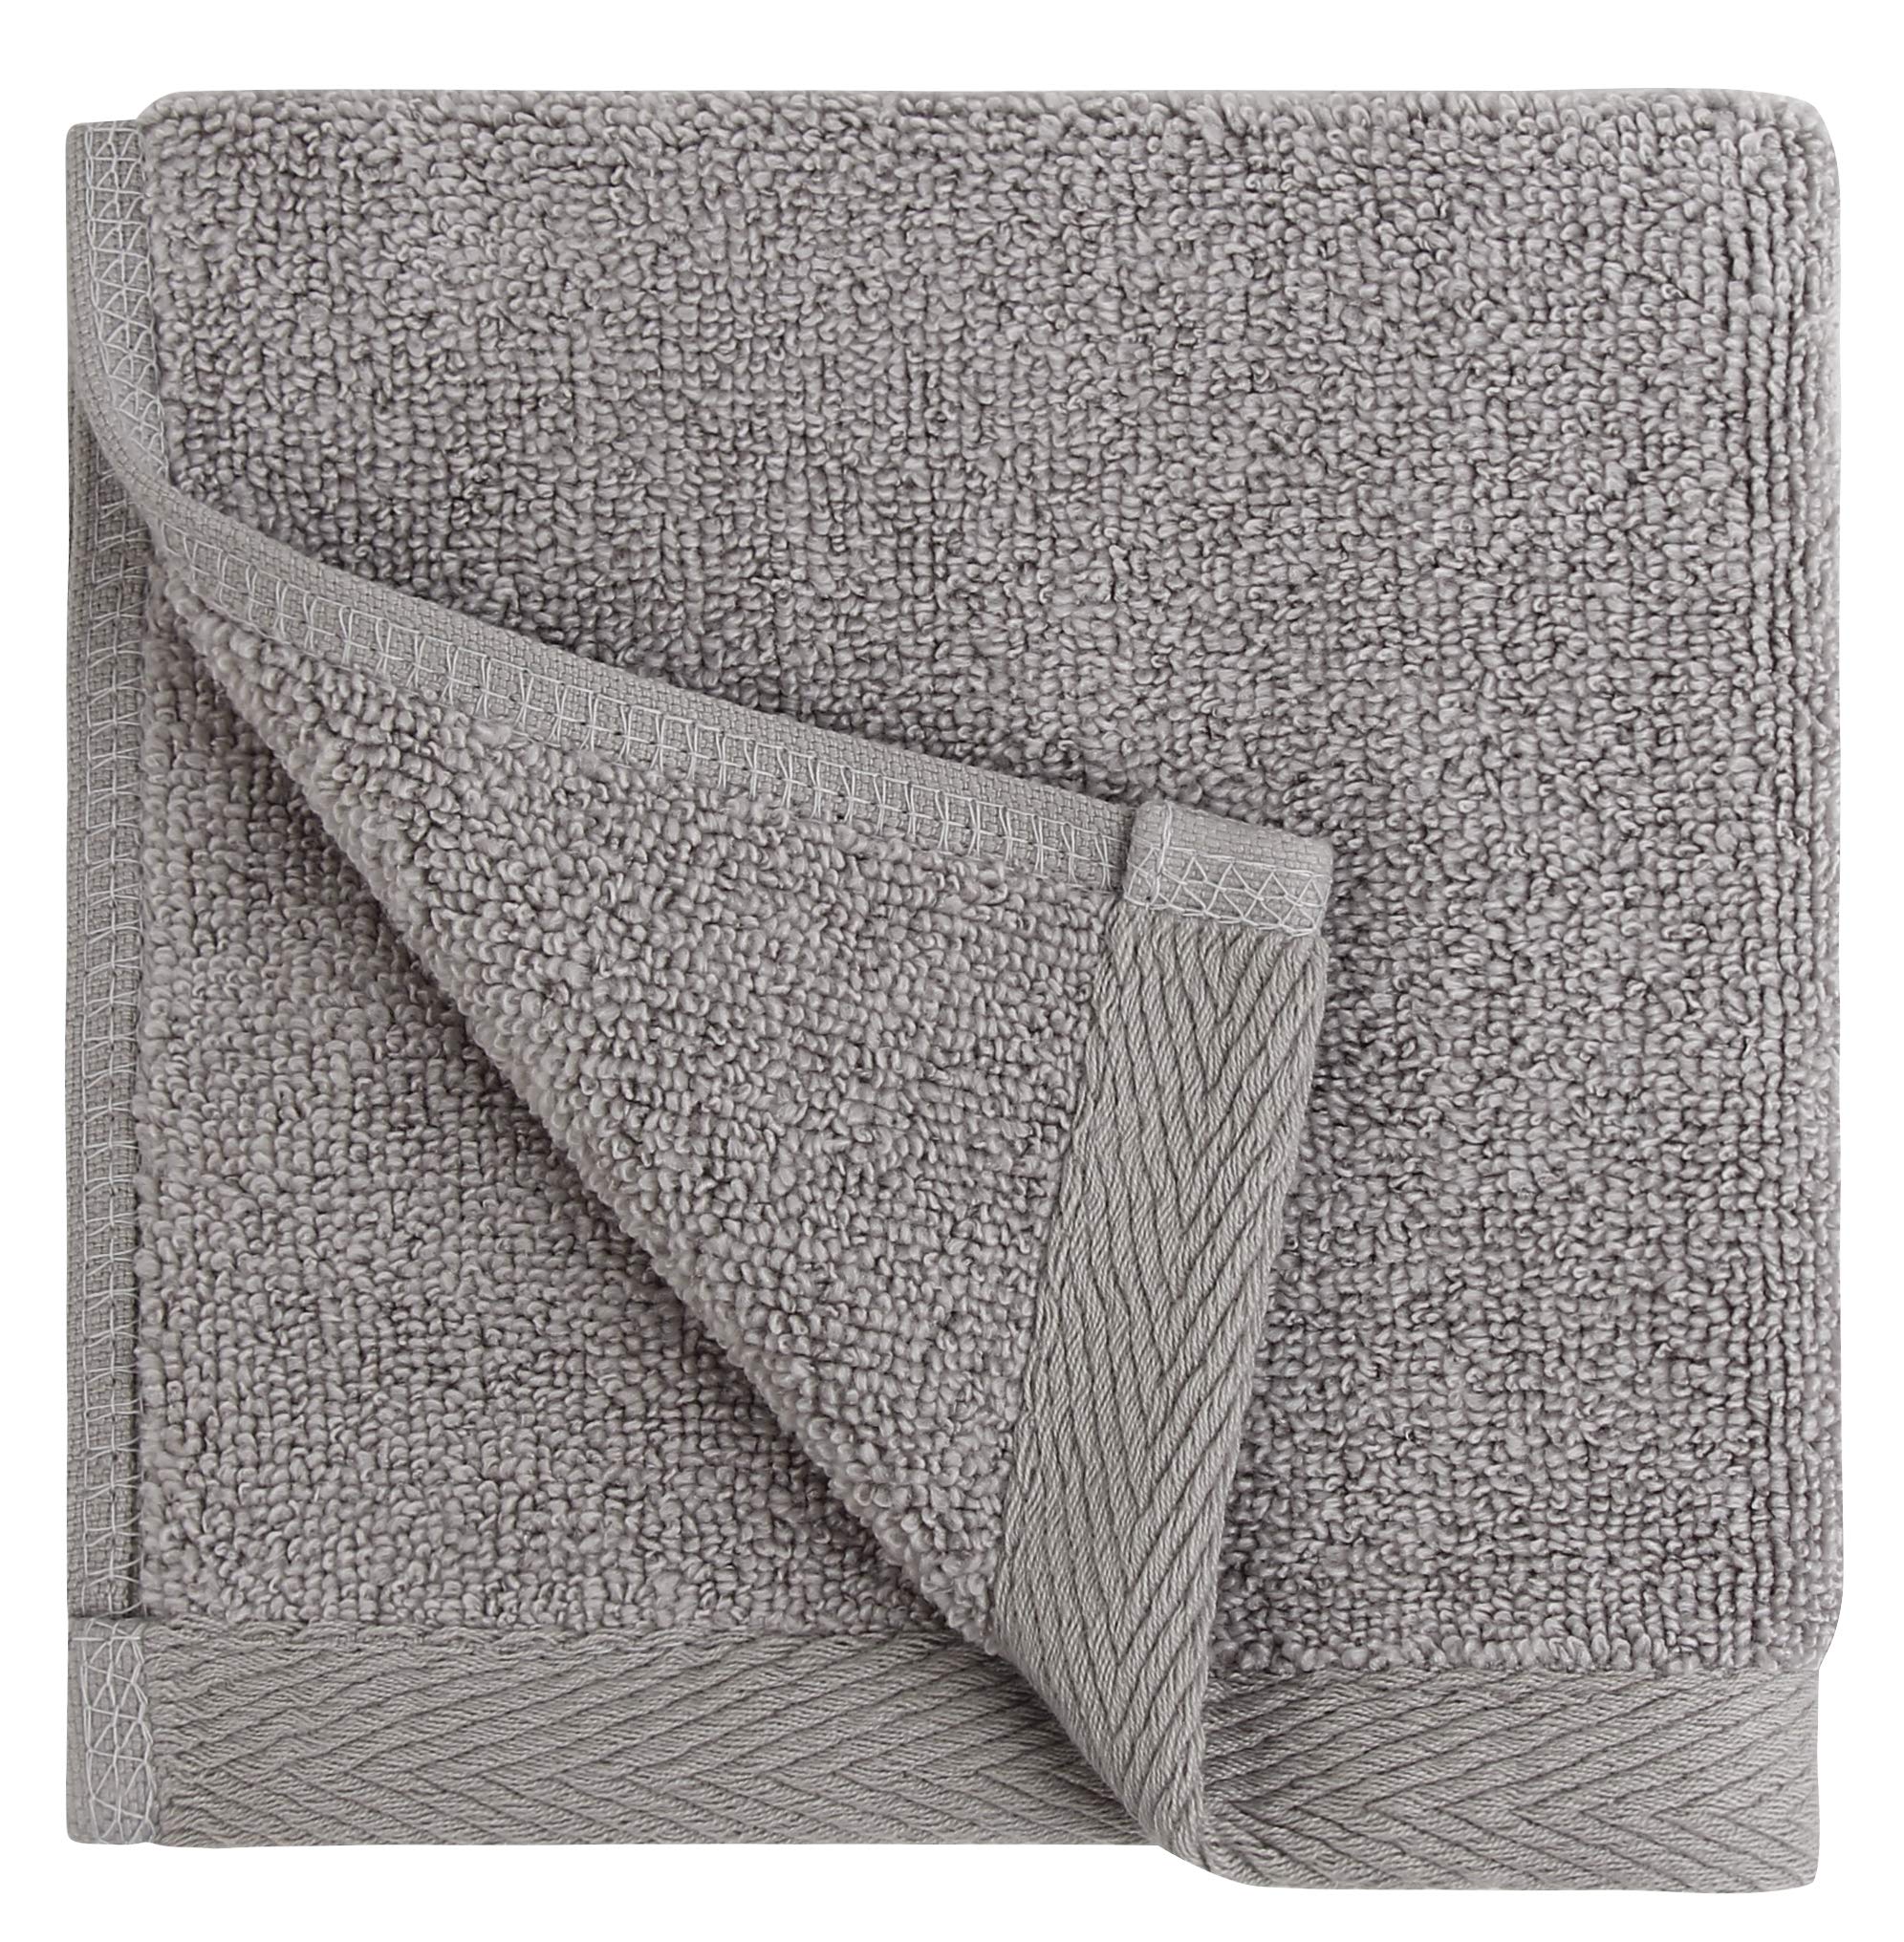 Everplush Flat Loop Quick-Dry Washcloth Towel Set, 6 Pc, Ash